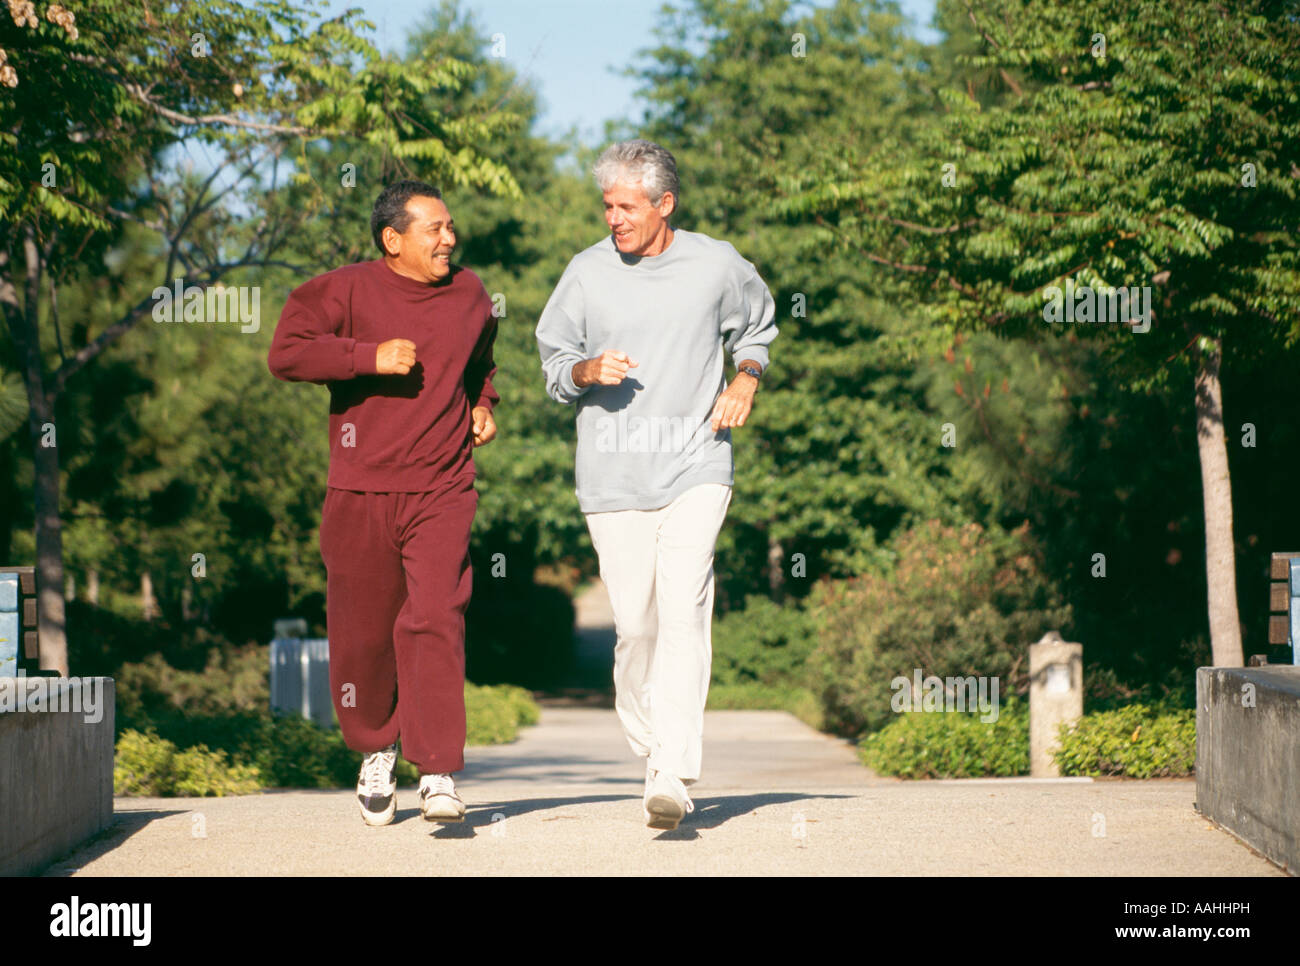 Senior men jogging along trail path ethnic diversity racially diverse African American caucasian, talking smiling Stock Photo